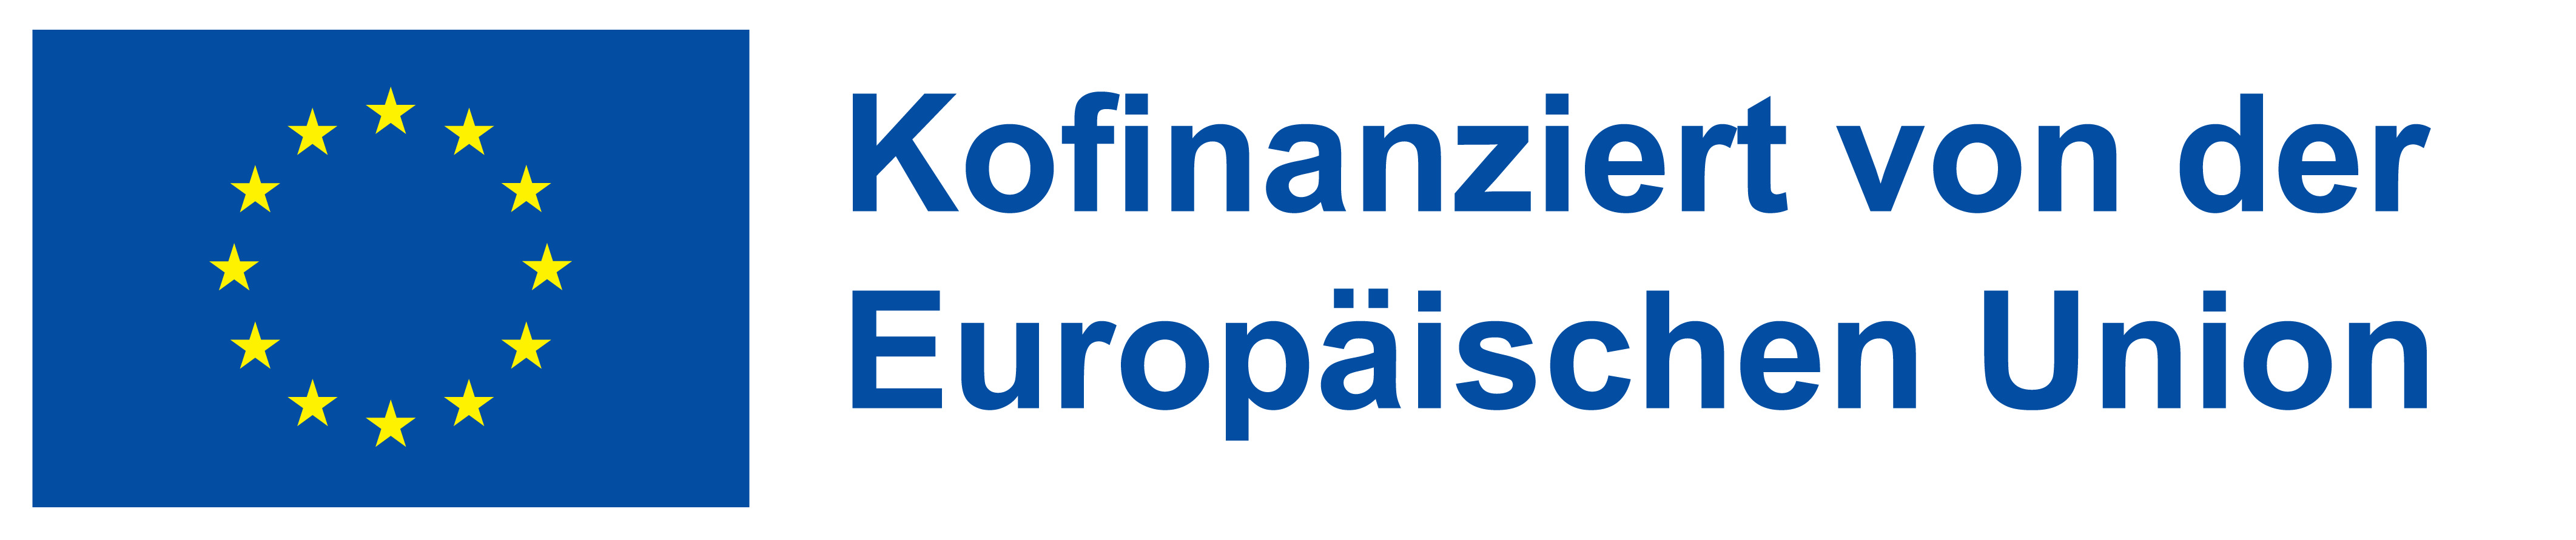 ESF - Europäischer Sozialfonds Plus Förderperiode 2021-2027 - Logo